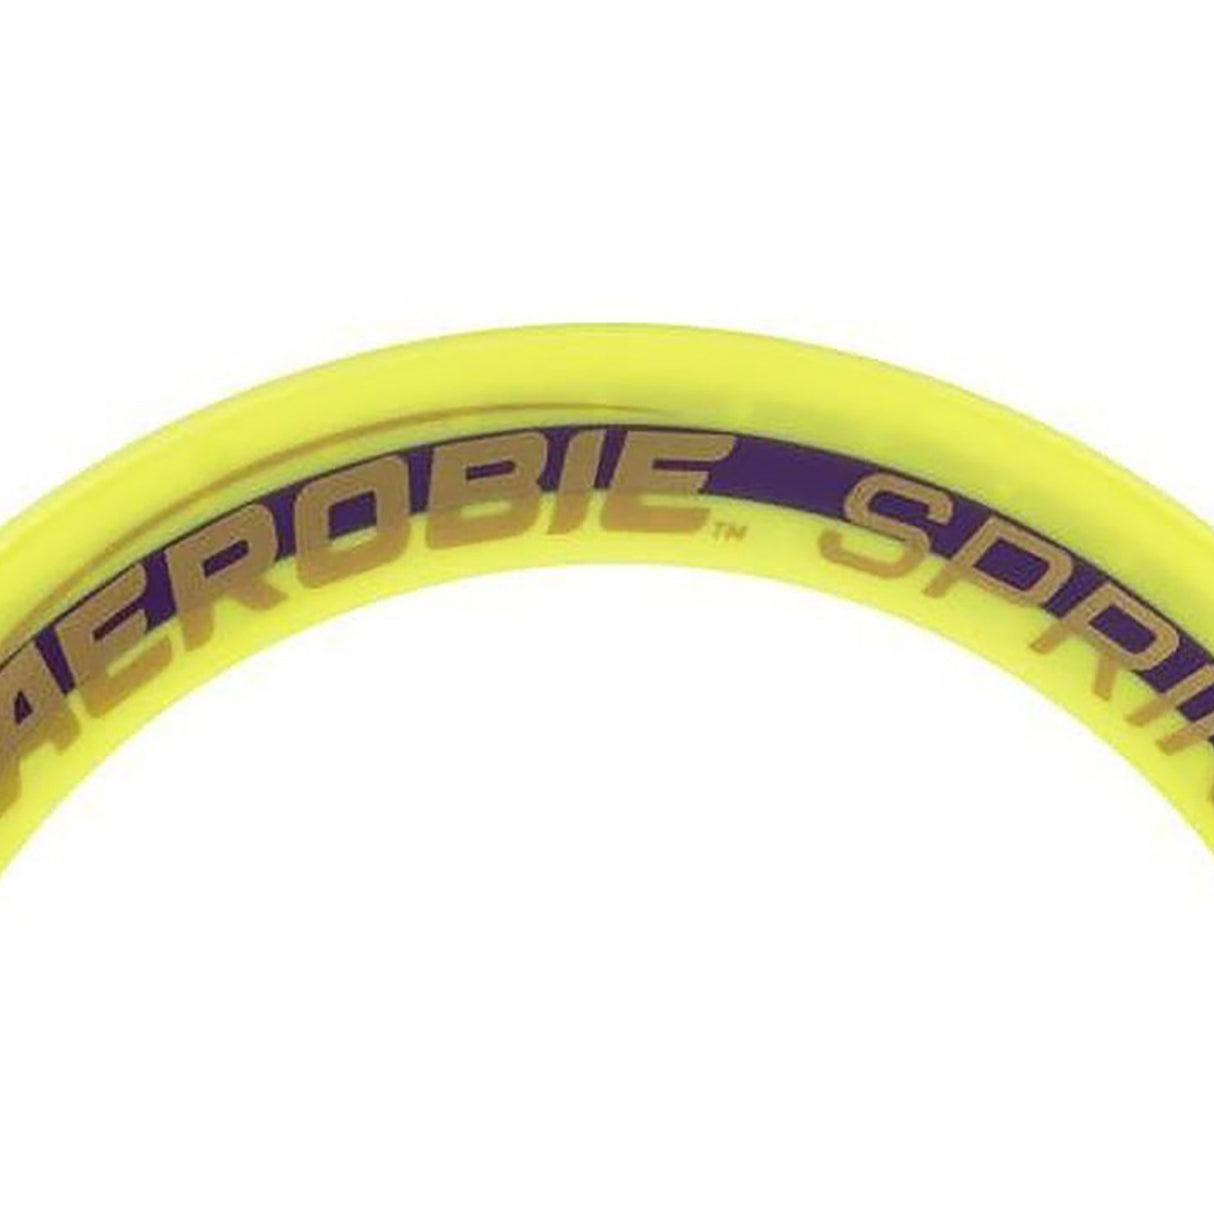 Aerobie Sprint Frisbee Ring (25 cms)